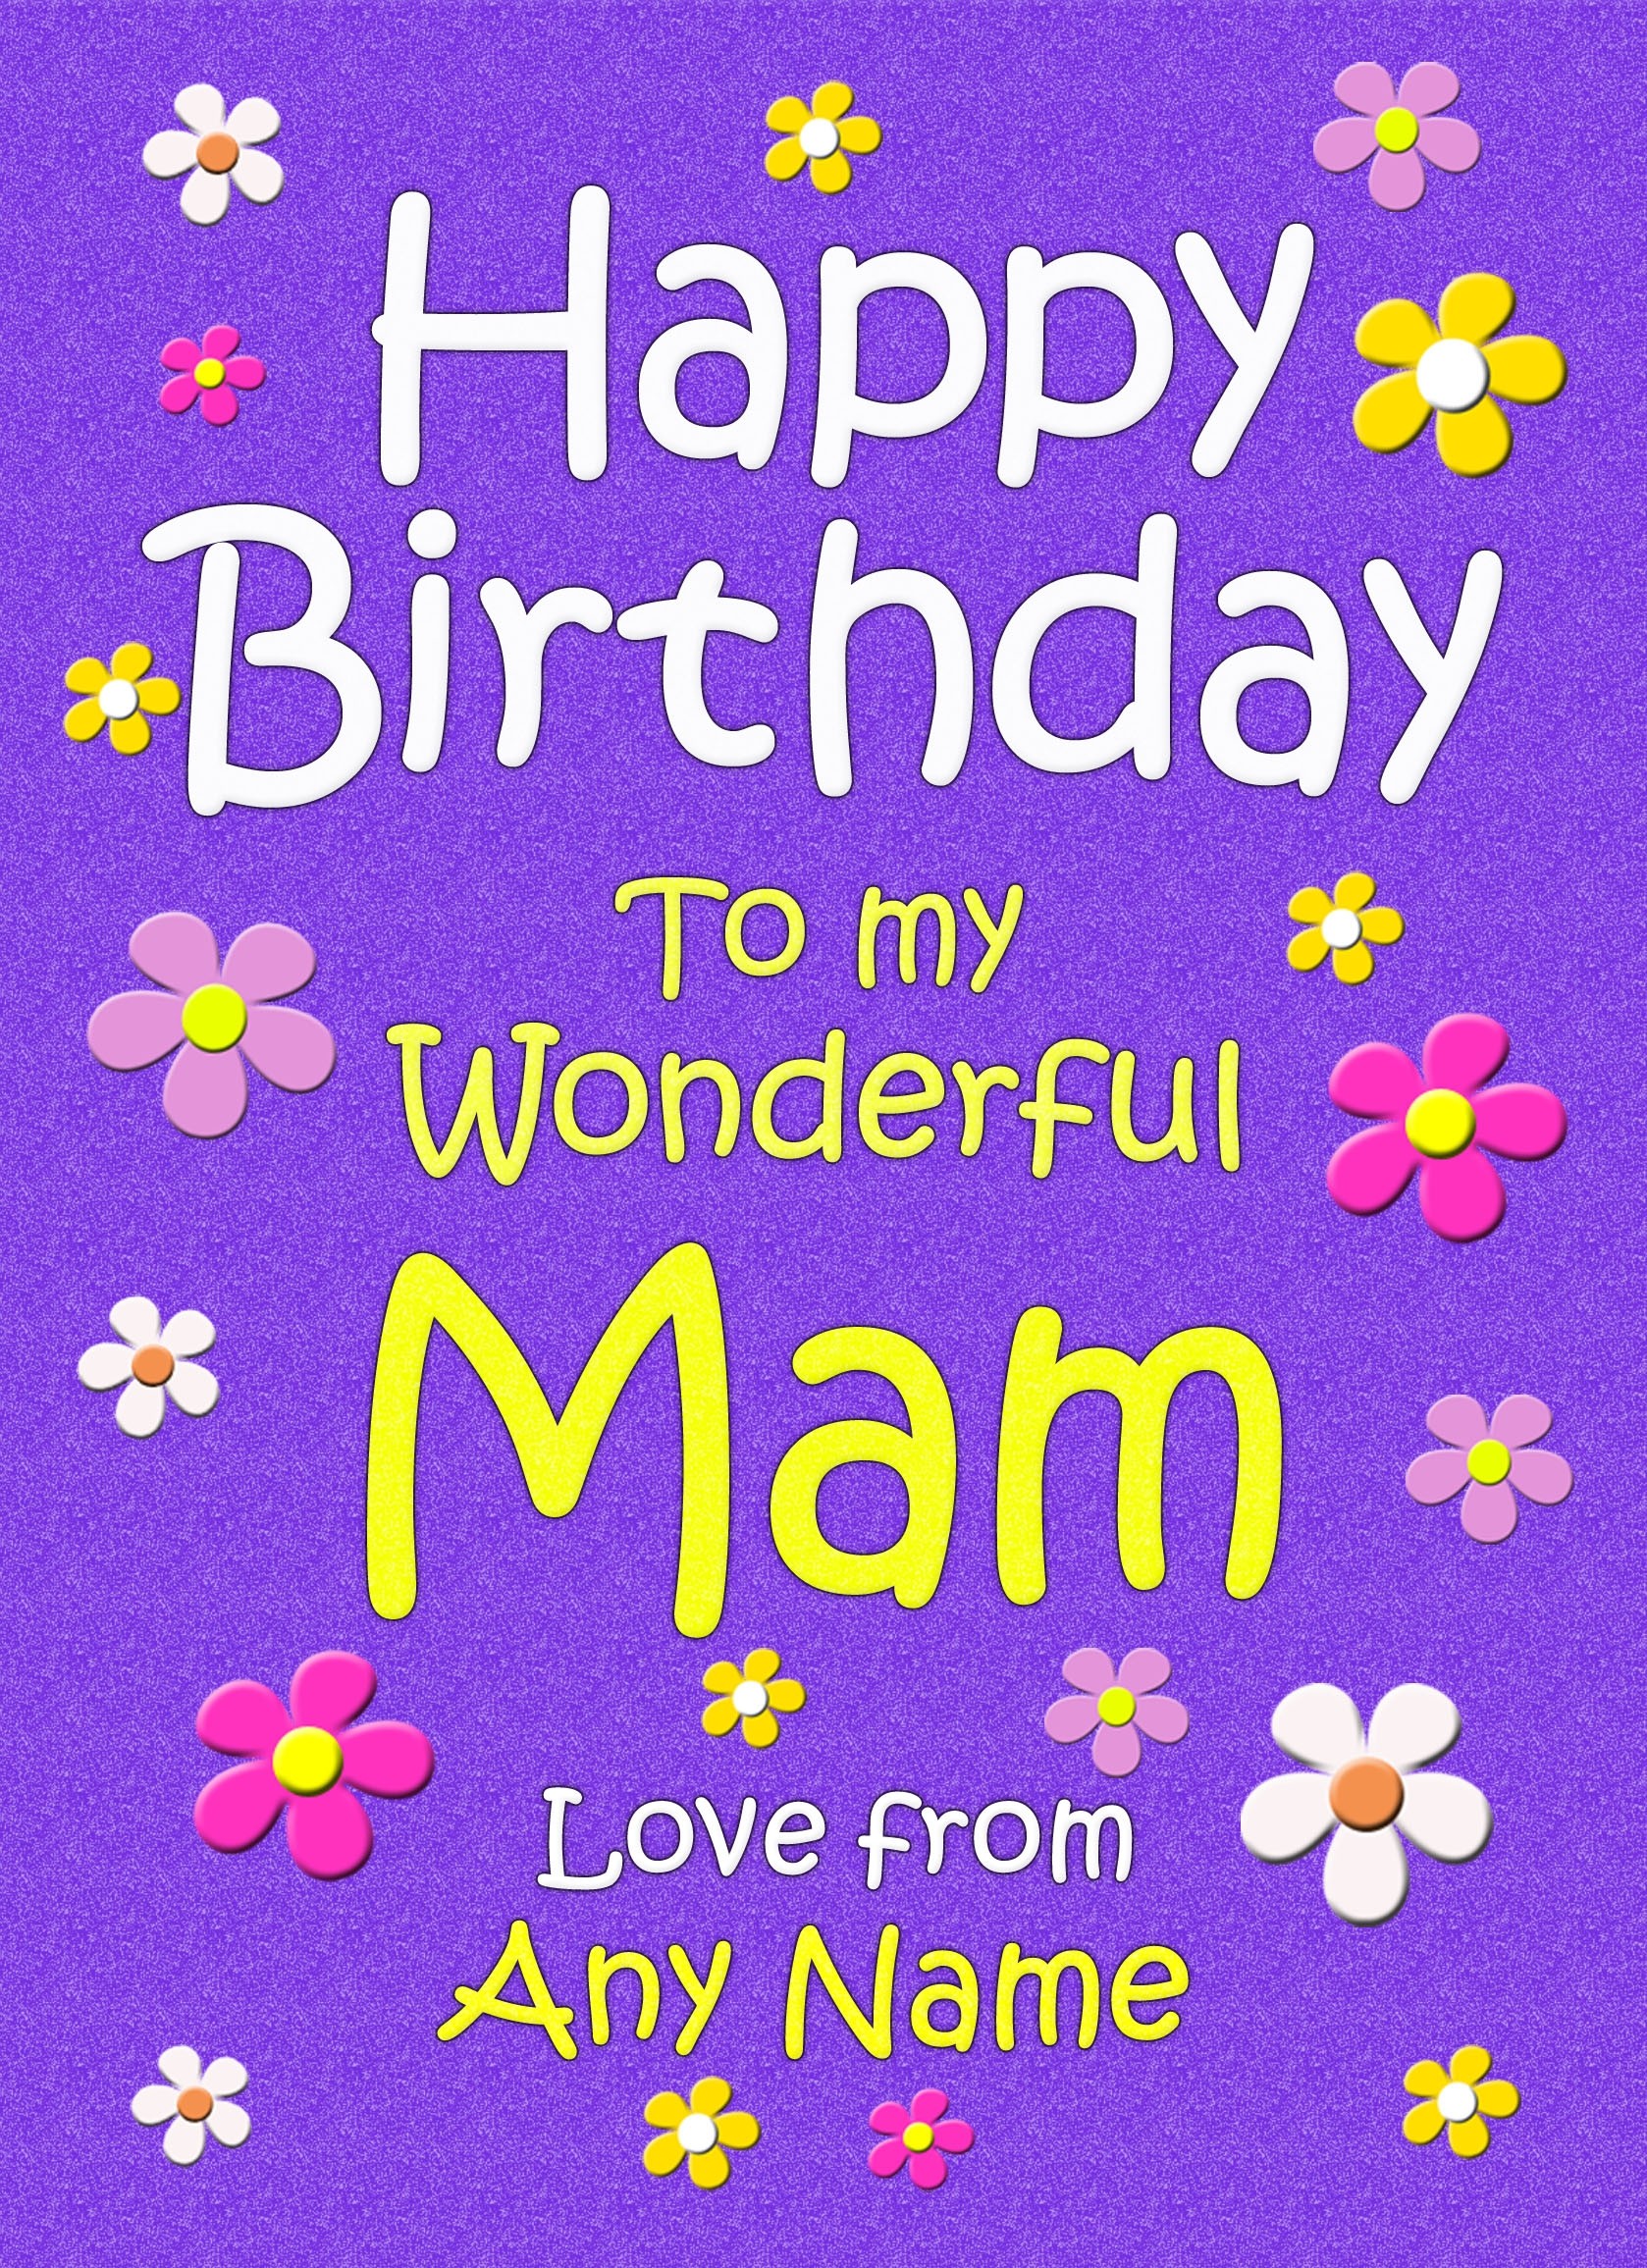 Personalised Mam Birthday Card (Purple)